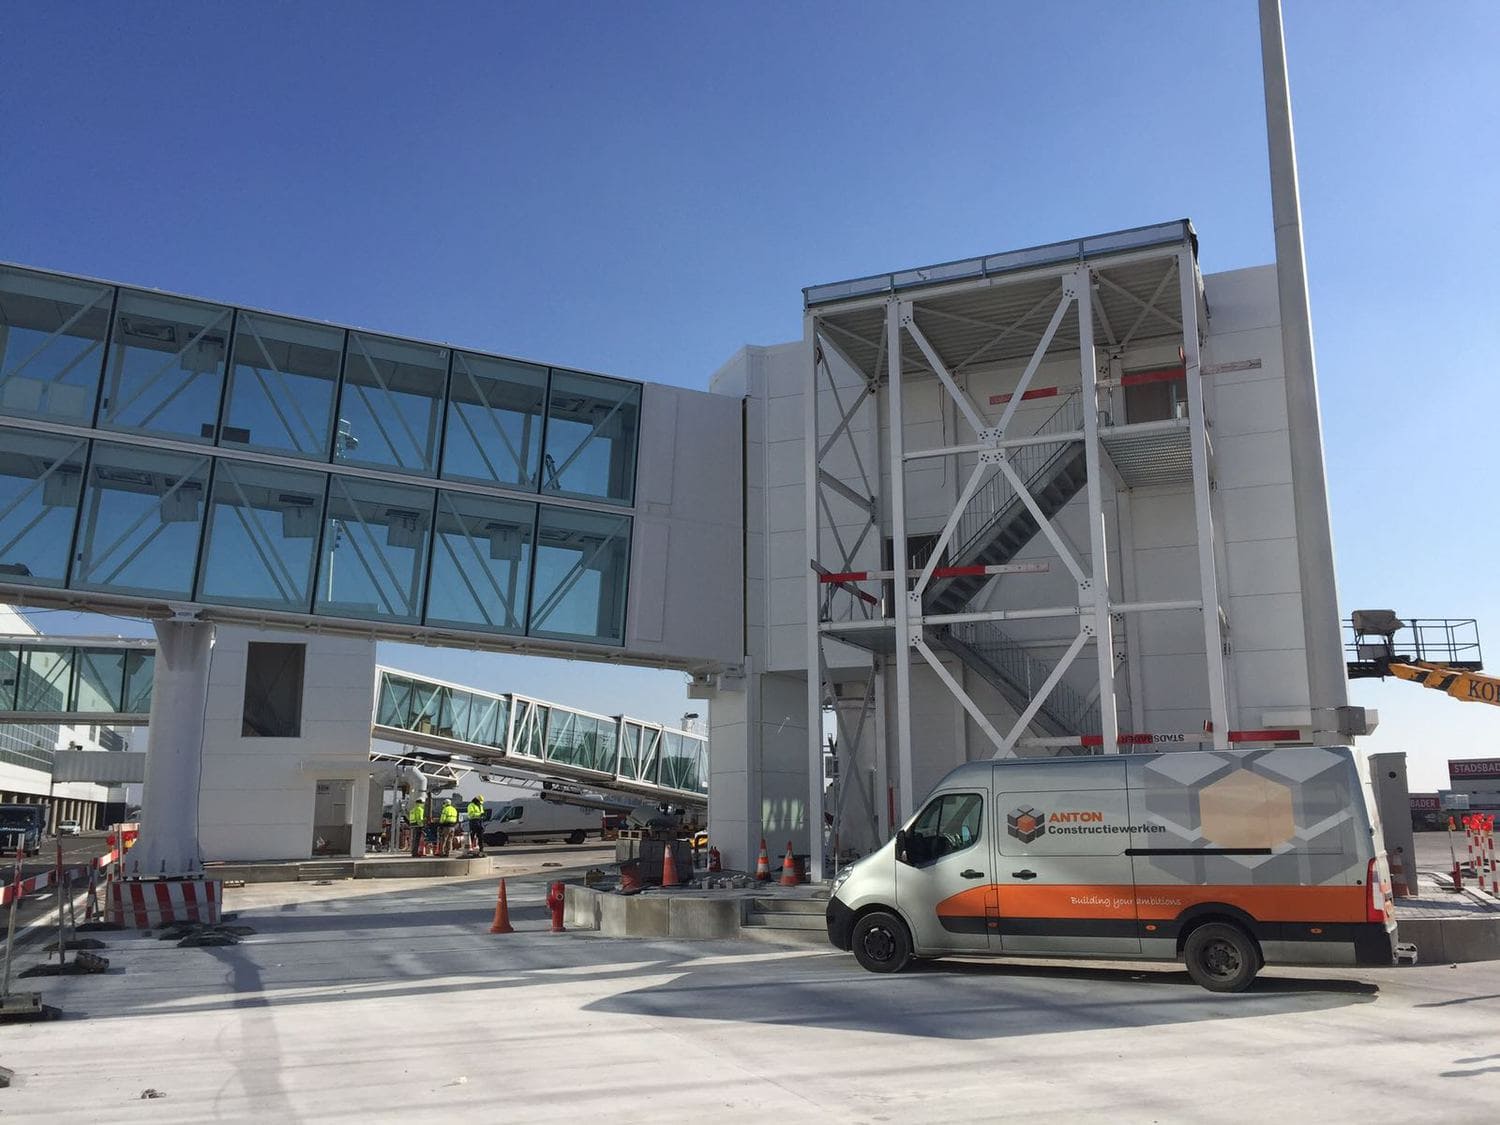 Trappenhuis en installatie PBB luchthaven Zaventem voor Airbus A380